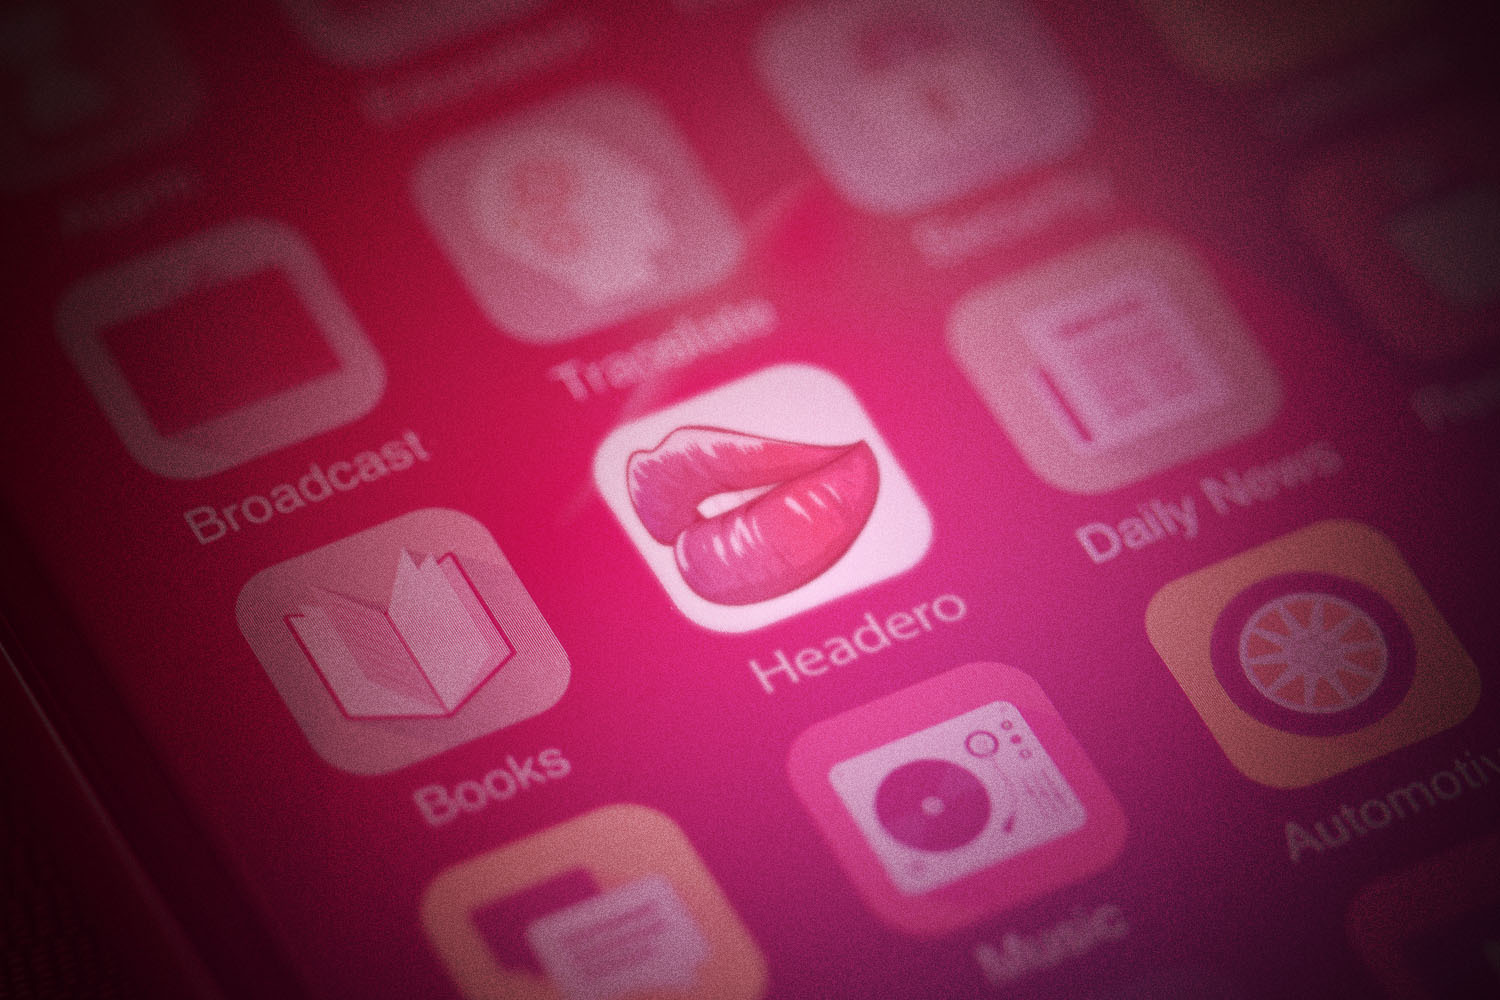 Dating App Headero Is Combatting Oral Sex Stigma pic picture